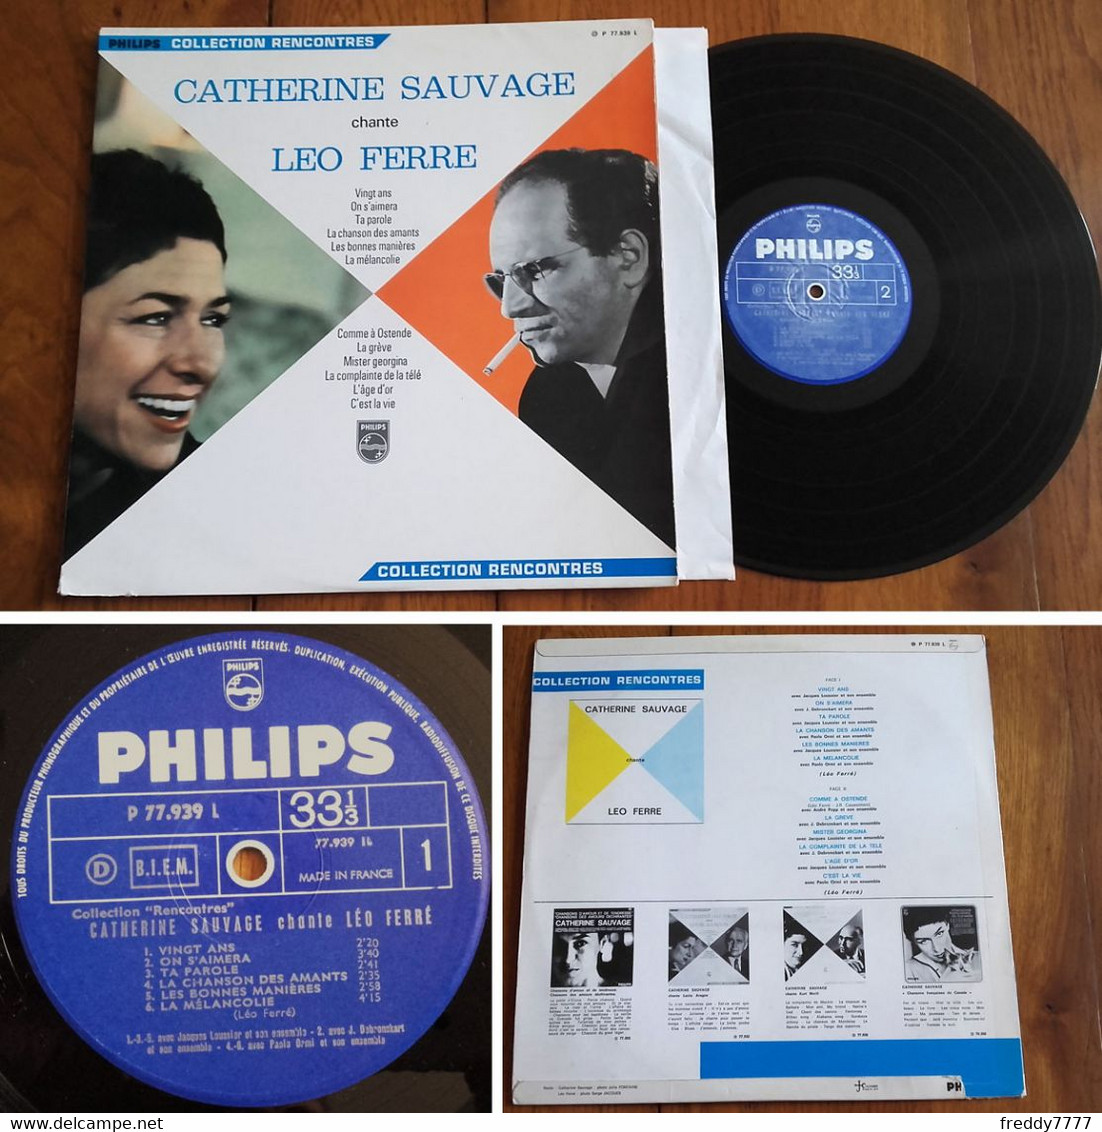 RARE French LP 33t RPM BIEM (12") CATHERINE SAUVAGE Chante LEO FERRE (1966) - Collectors